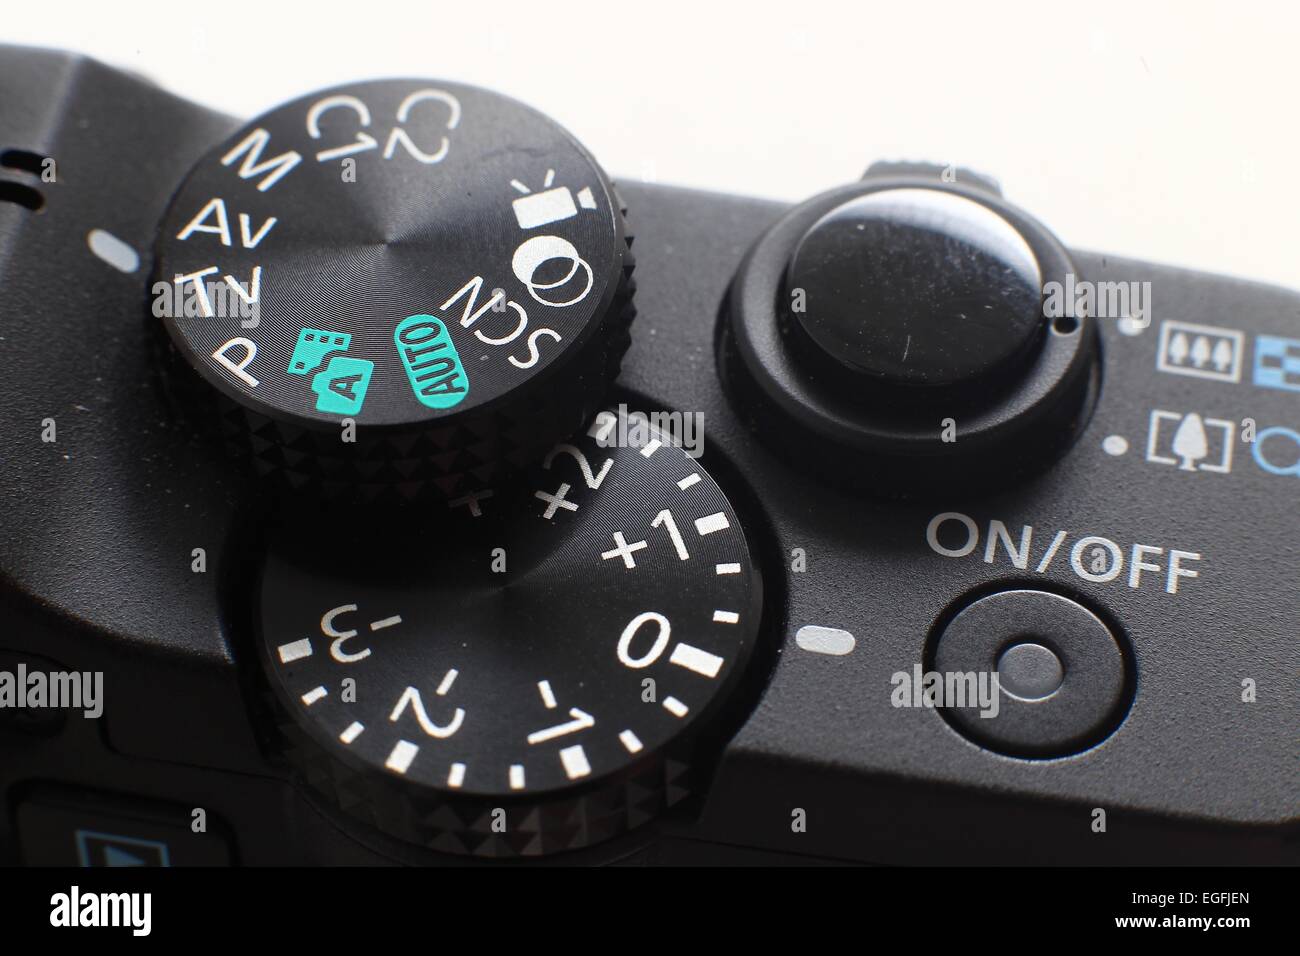 Canon Powershot G16 Digital Compast Camera. Stock Photo